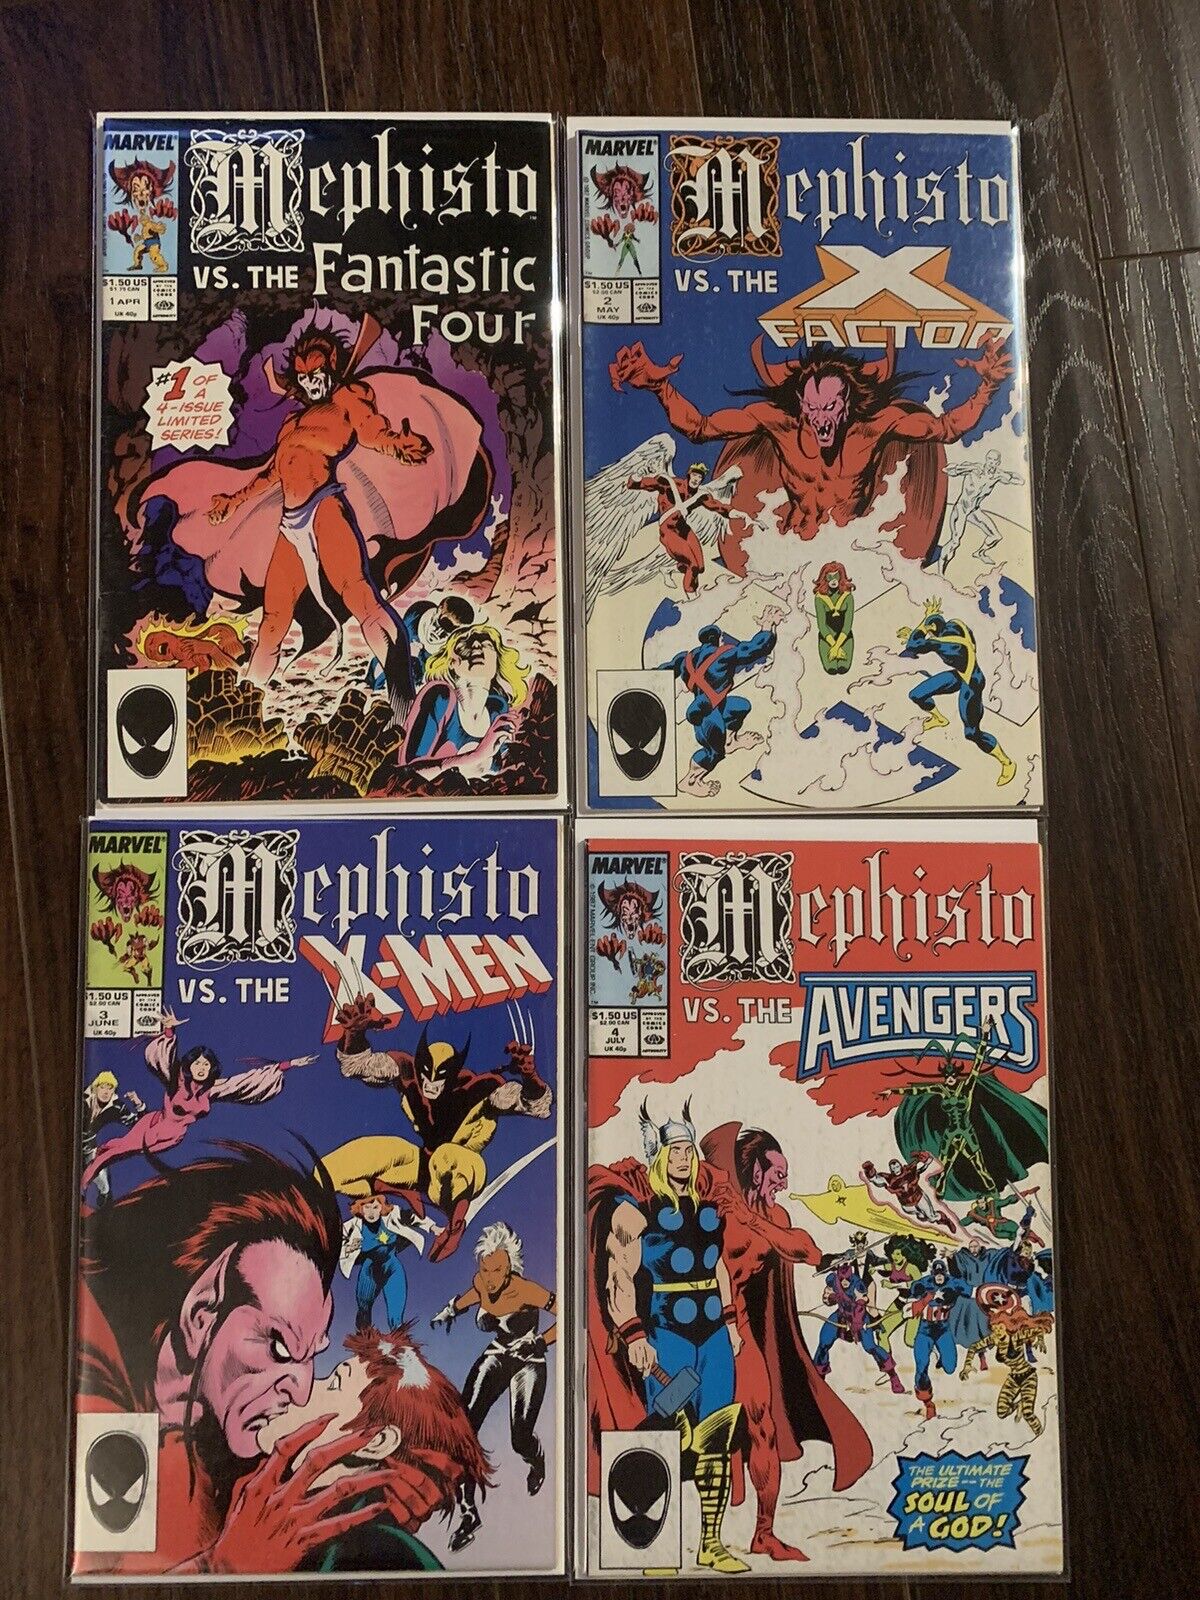 Mephisto vs #1 2 3 4 - Complete Set Fantastic Four Avengers X-Men Marvel Comics.